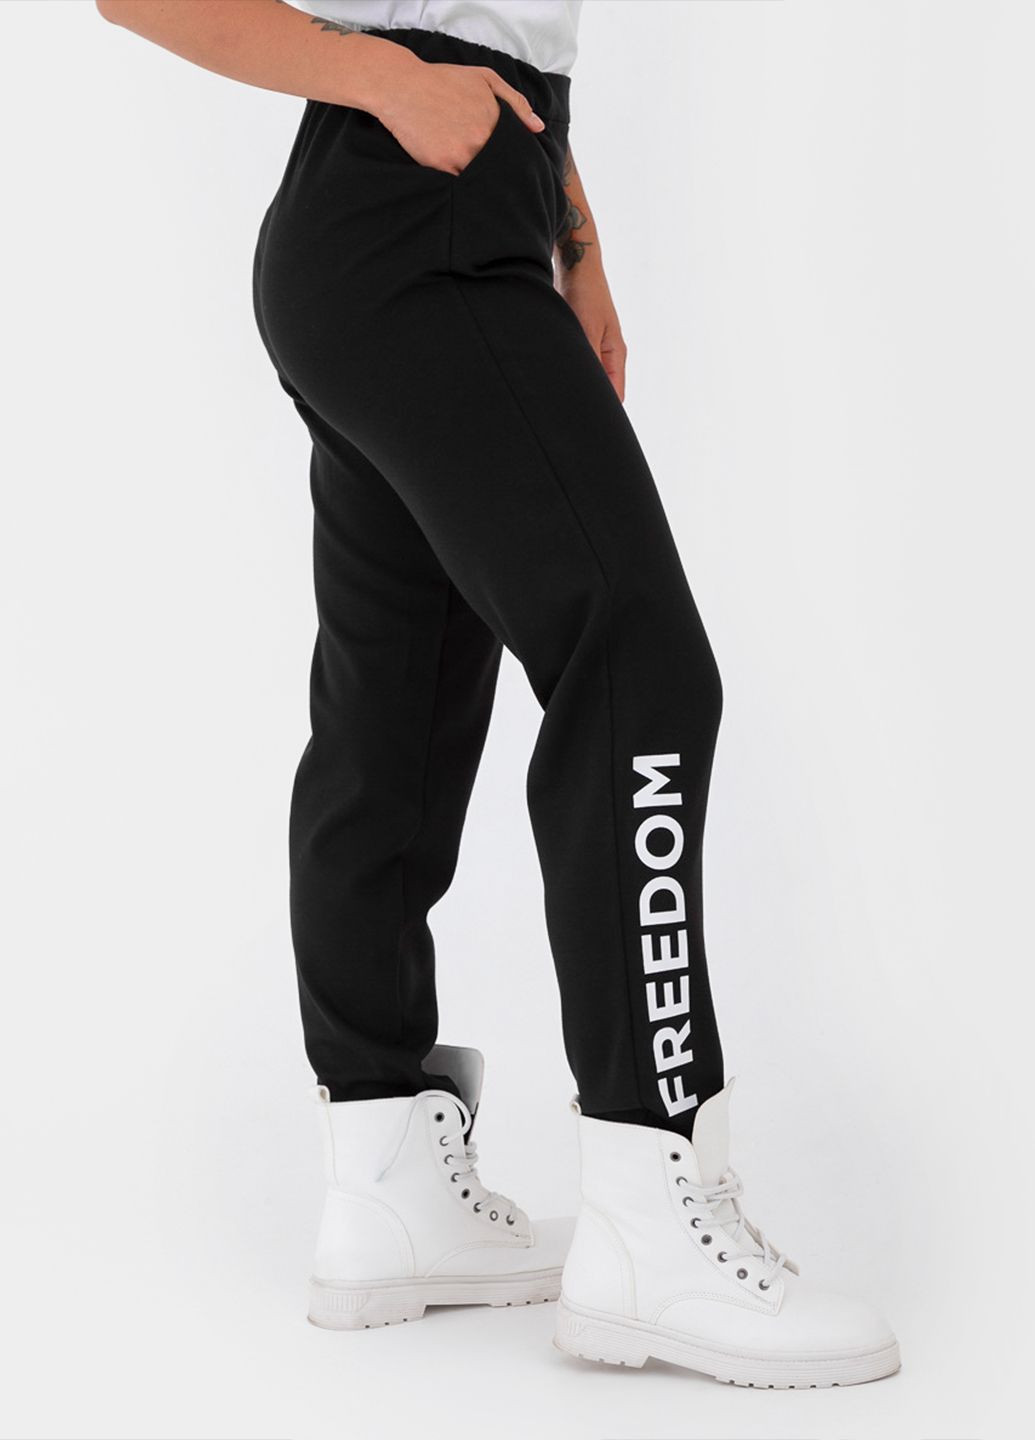 Спортивные штаны женские by Arber черные Freedom jogger losse w (285791832)